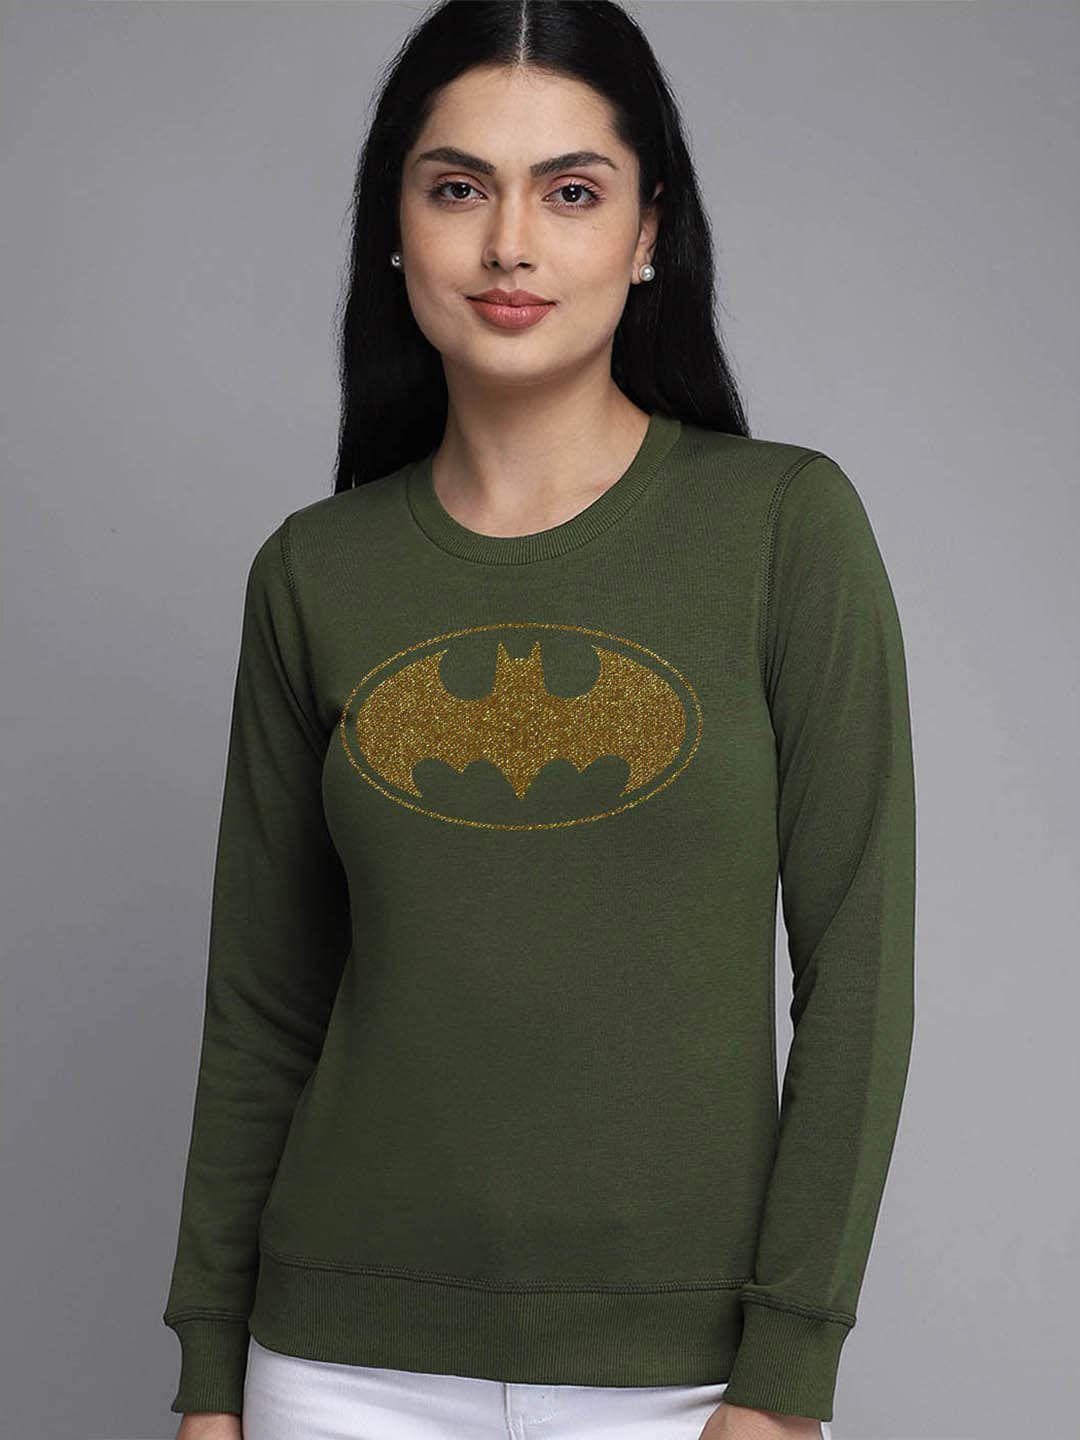 free authority batman printed round neck sweatshirts